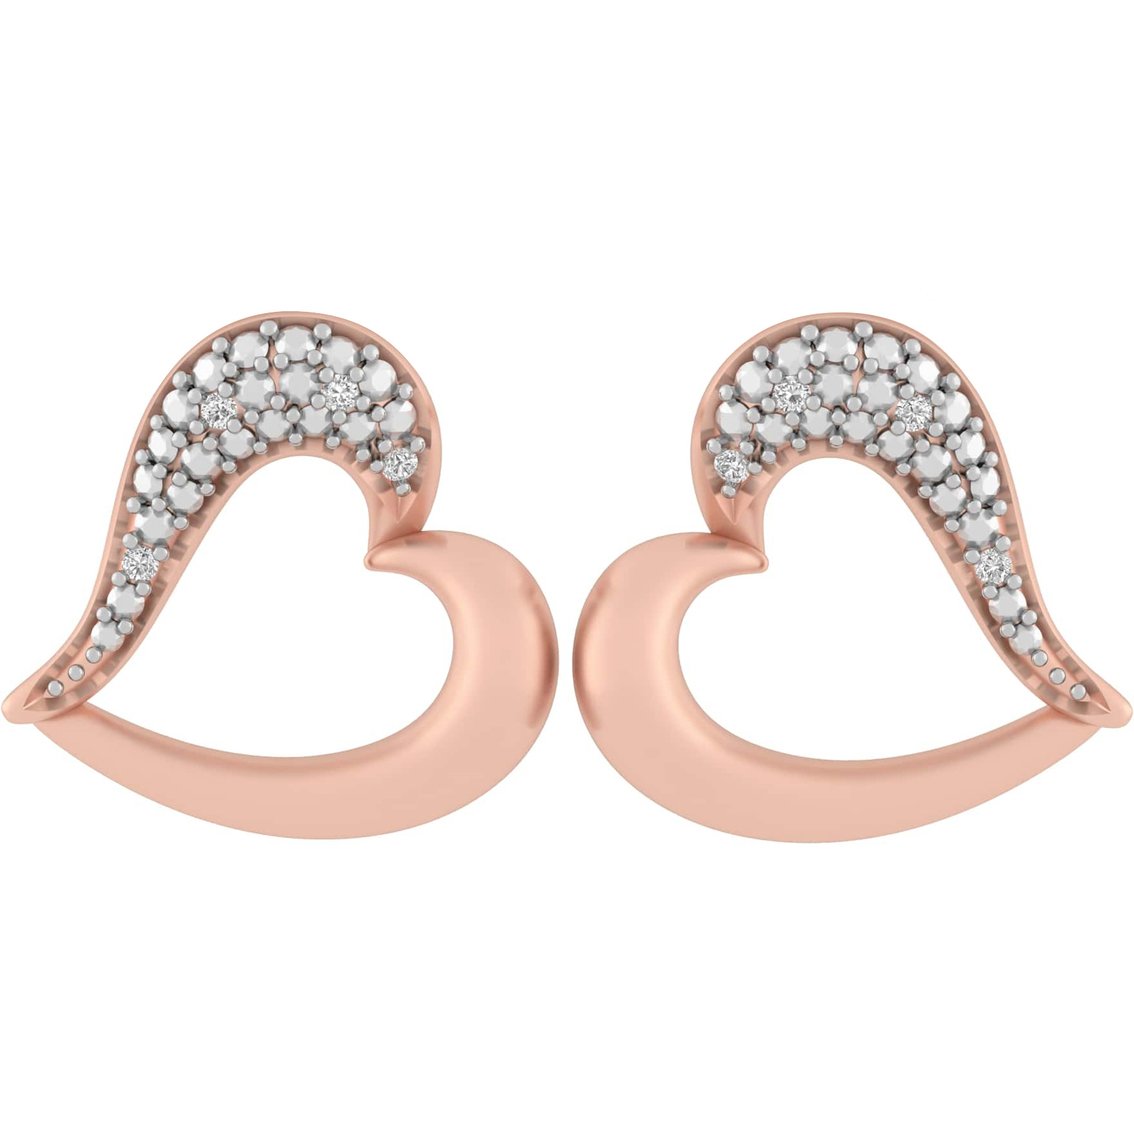 10k Rose Gold Over Sterling Silver Diamond Accent Heart Earrings